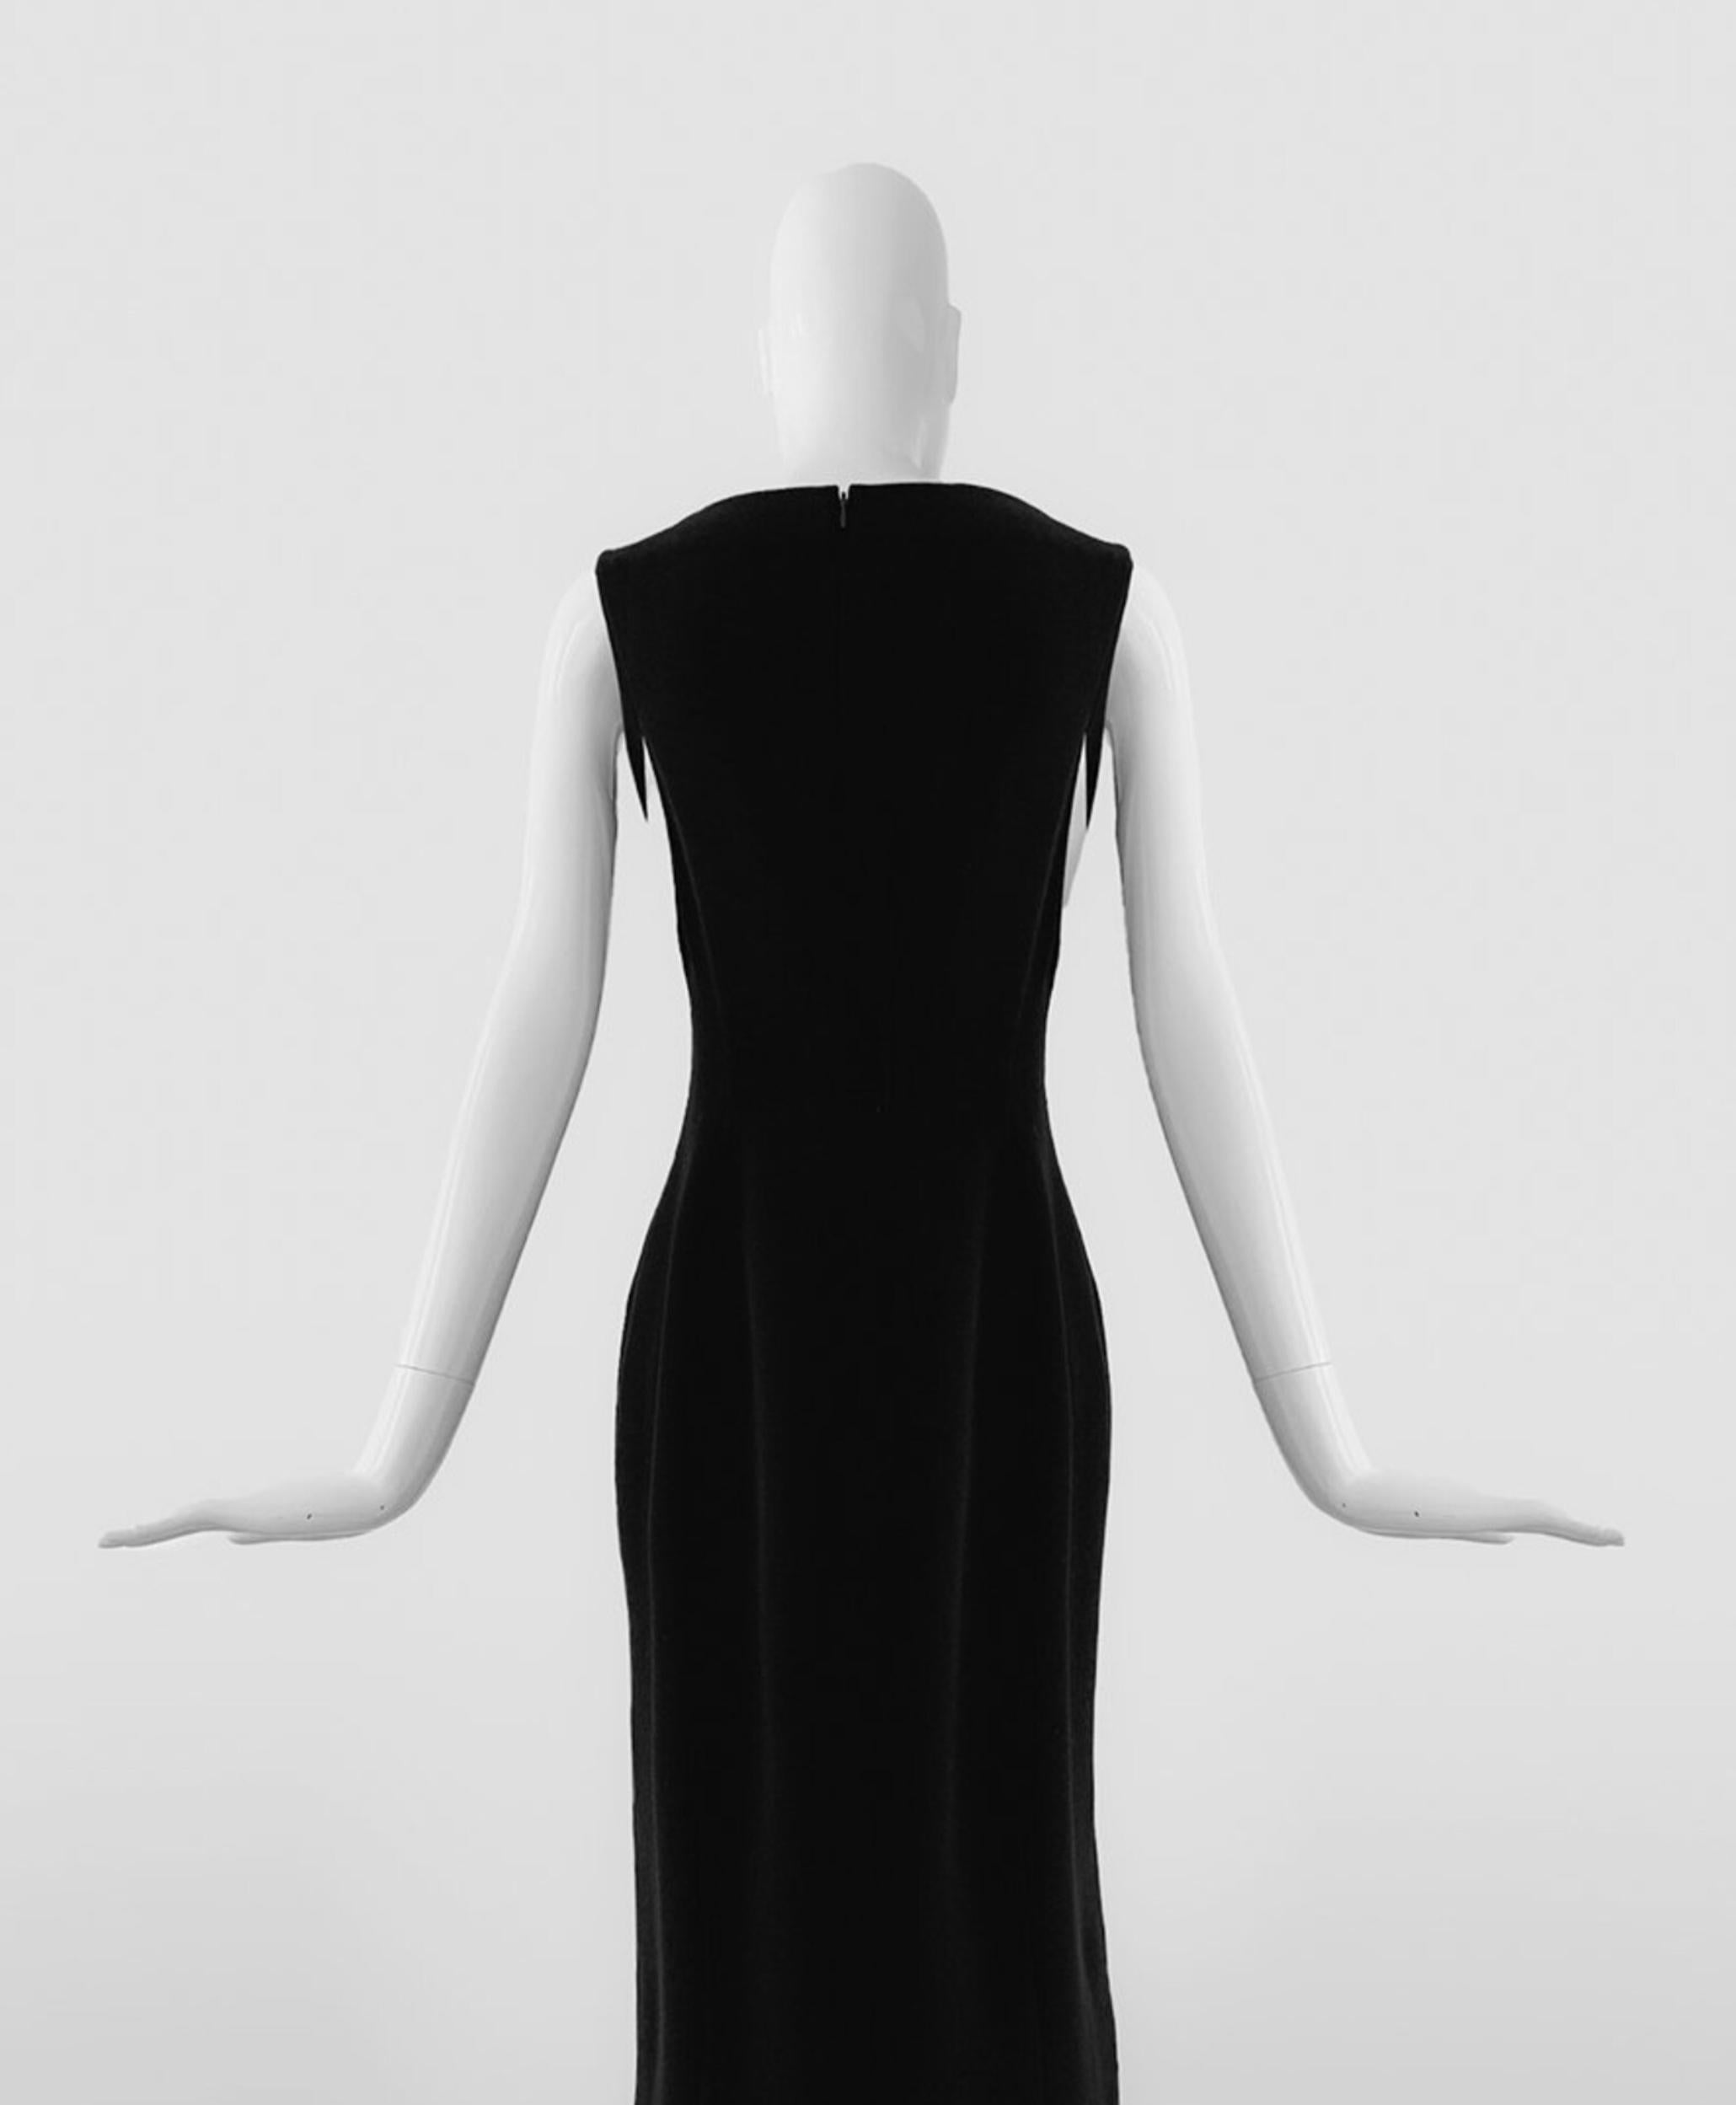 Thierry Mugler SS 1999 Evening Dress Vintage Designer Black White Avant Garde For Sale 3